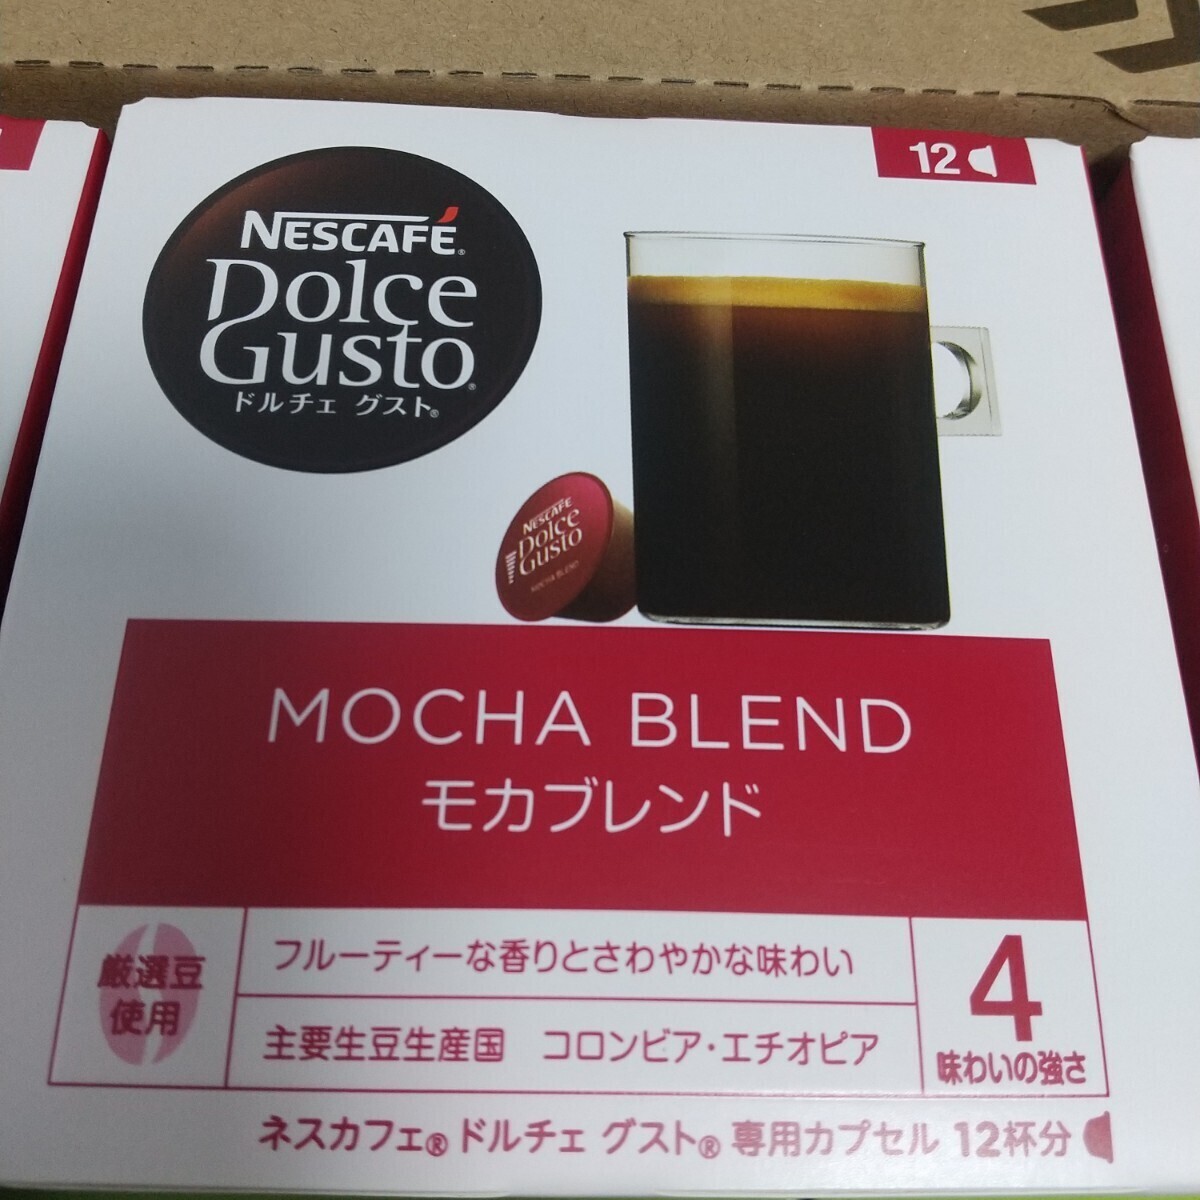  Dolce Gusto 12 шт ×12 коробка 144 кубок Dolce Gusto специальный Capsule кофе nes Cafe мокка Blend Nestle продажа комплектом кофе Capsule 